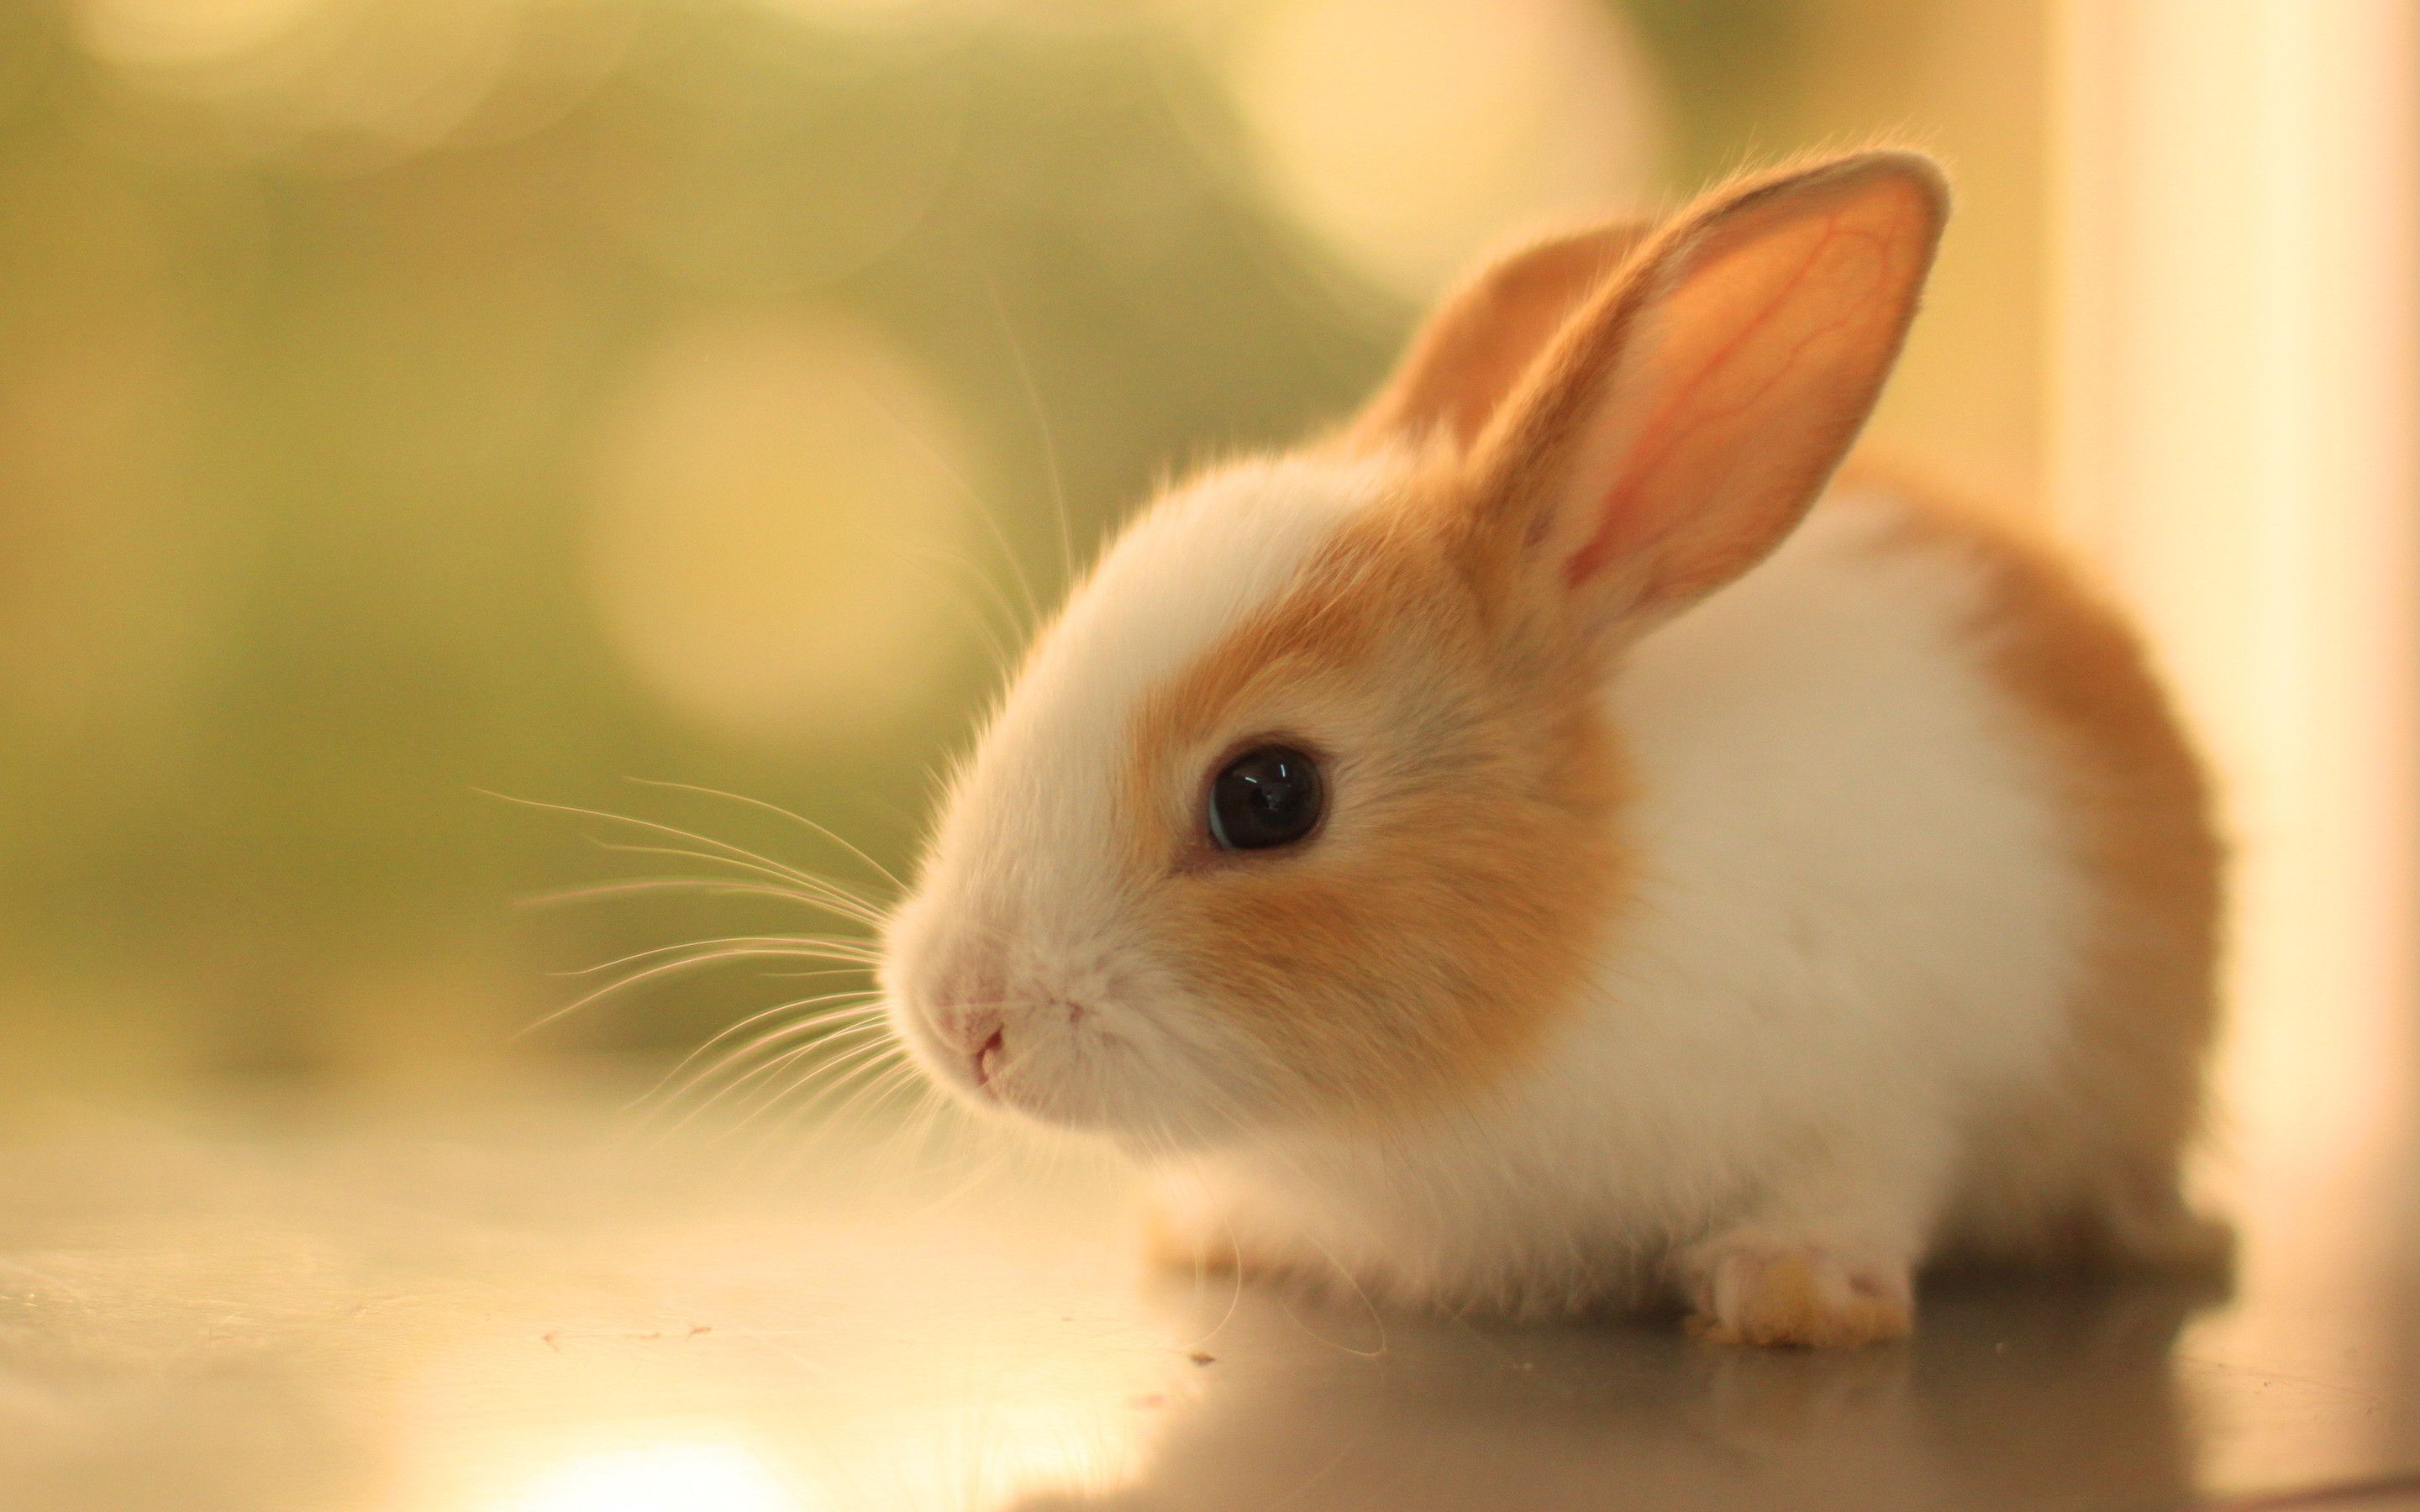 Cute bunny rabbits wallpapers